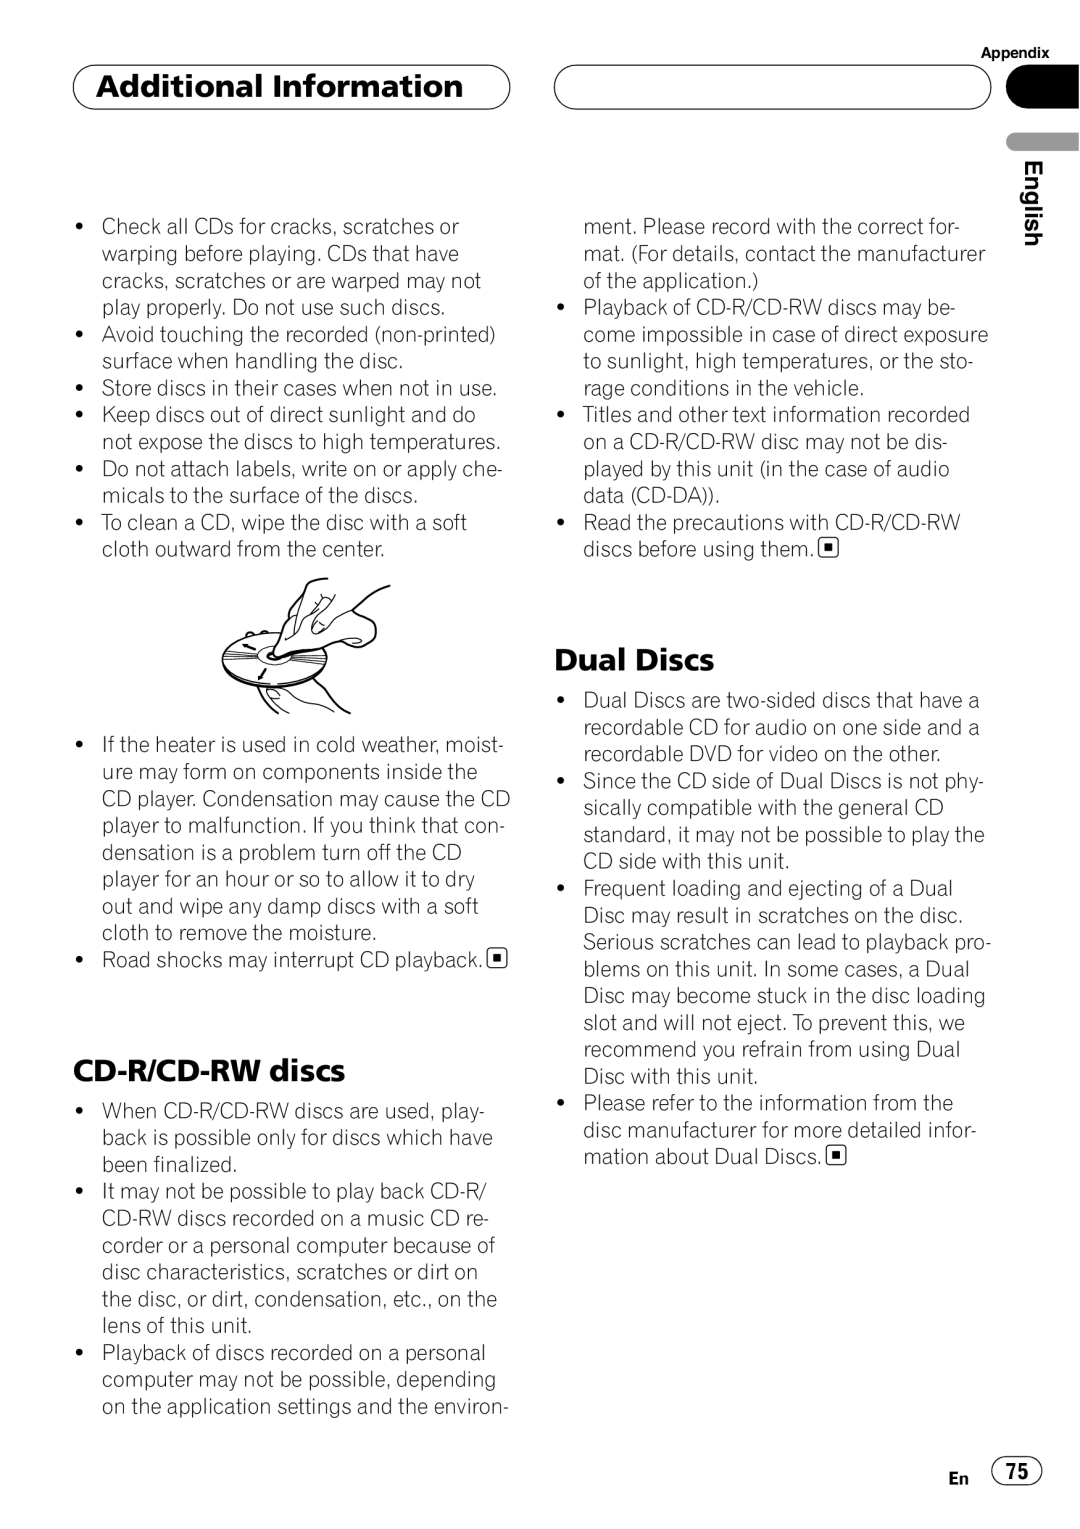 Sirius Satellite Radio DEH-P7800MP operation manual CD-R/CD-RWdiscs, Dual Discs, Additional Information 